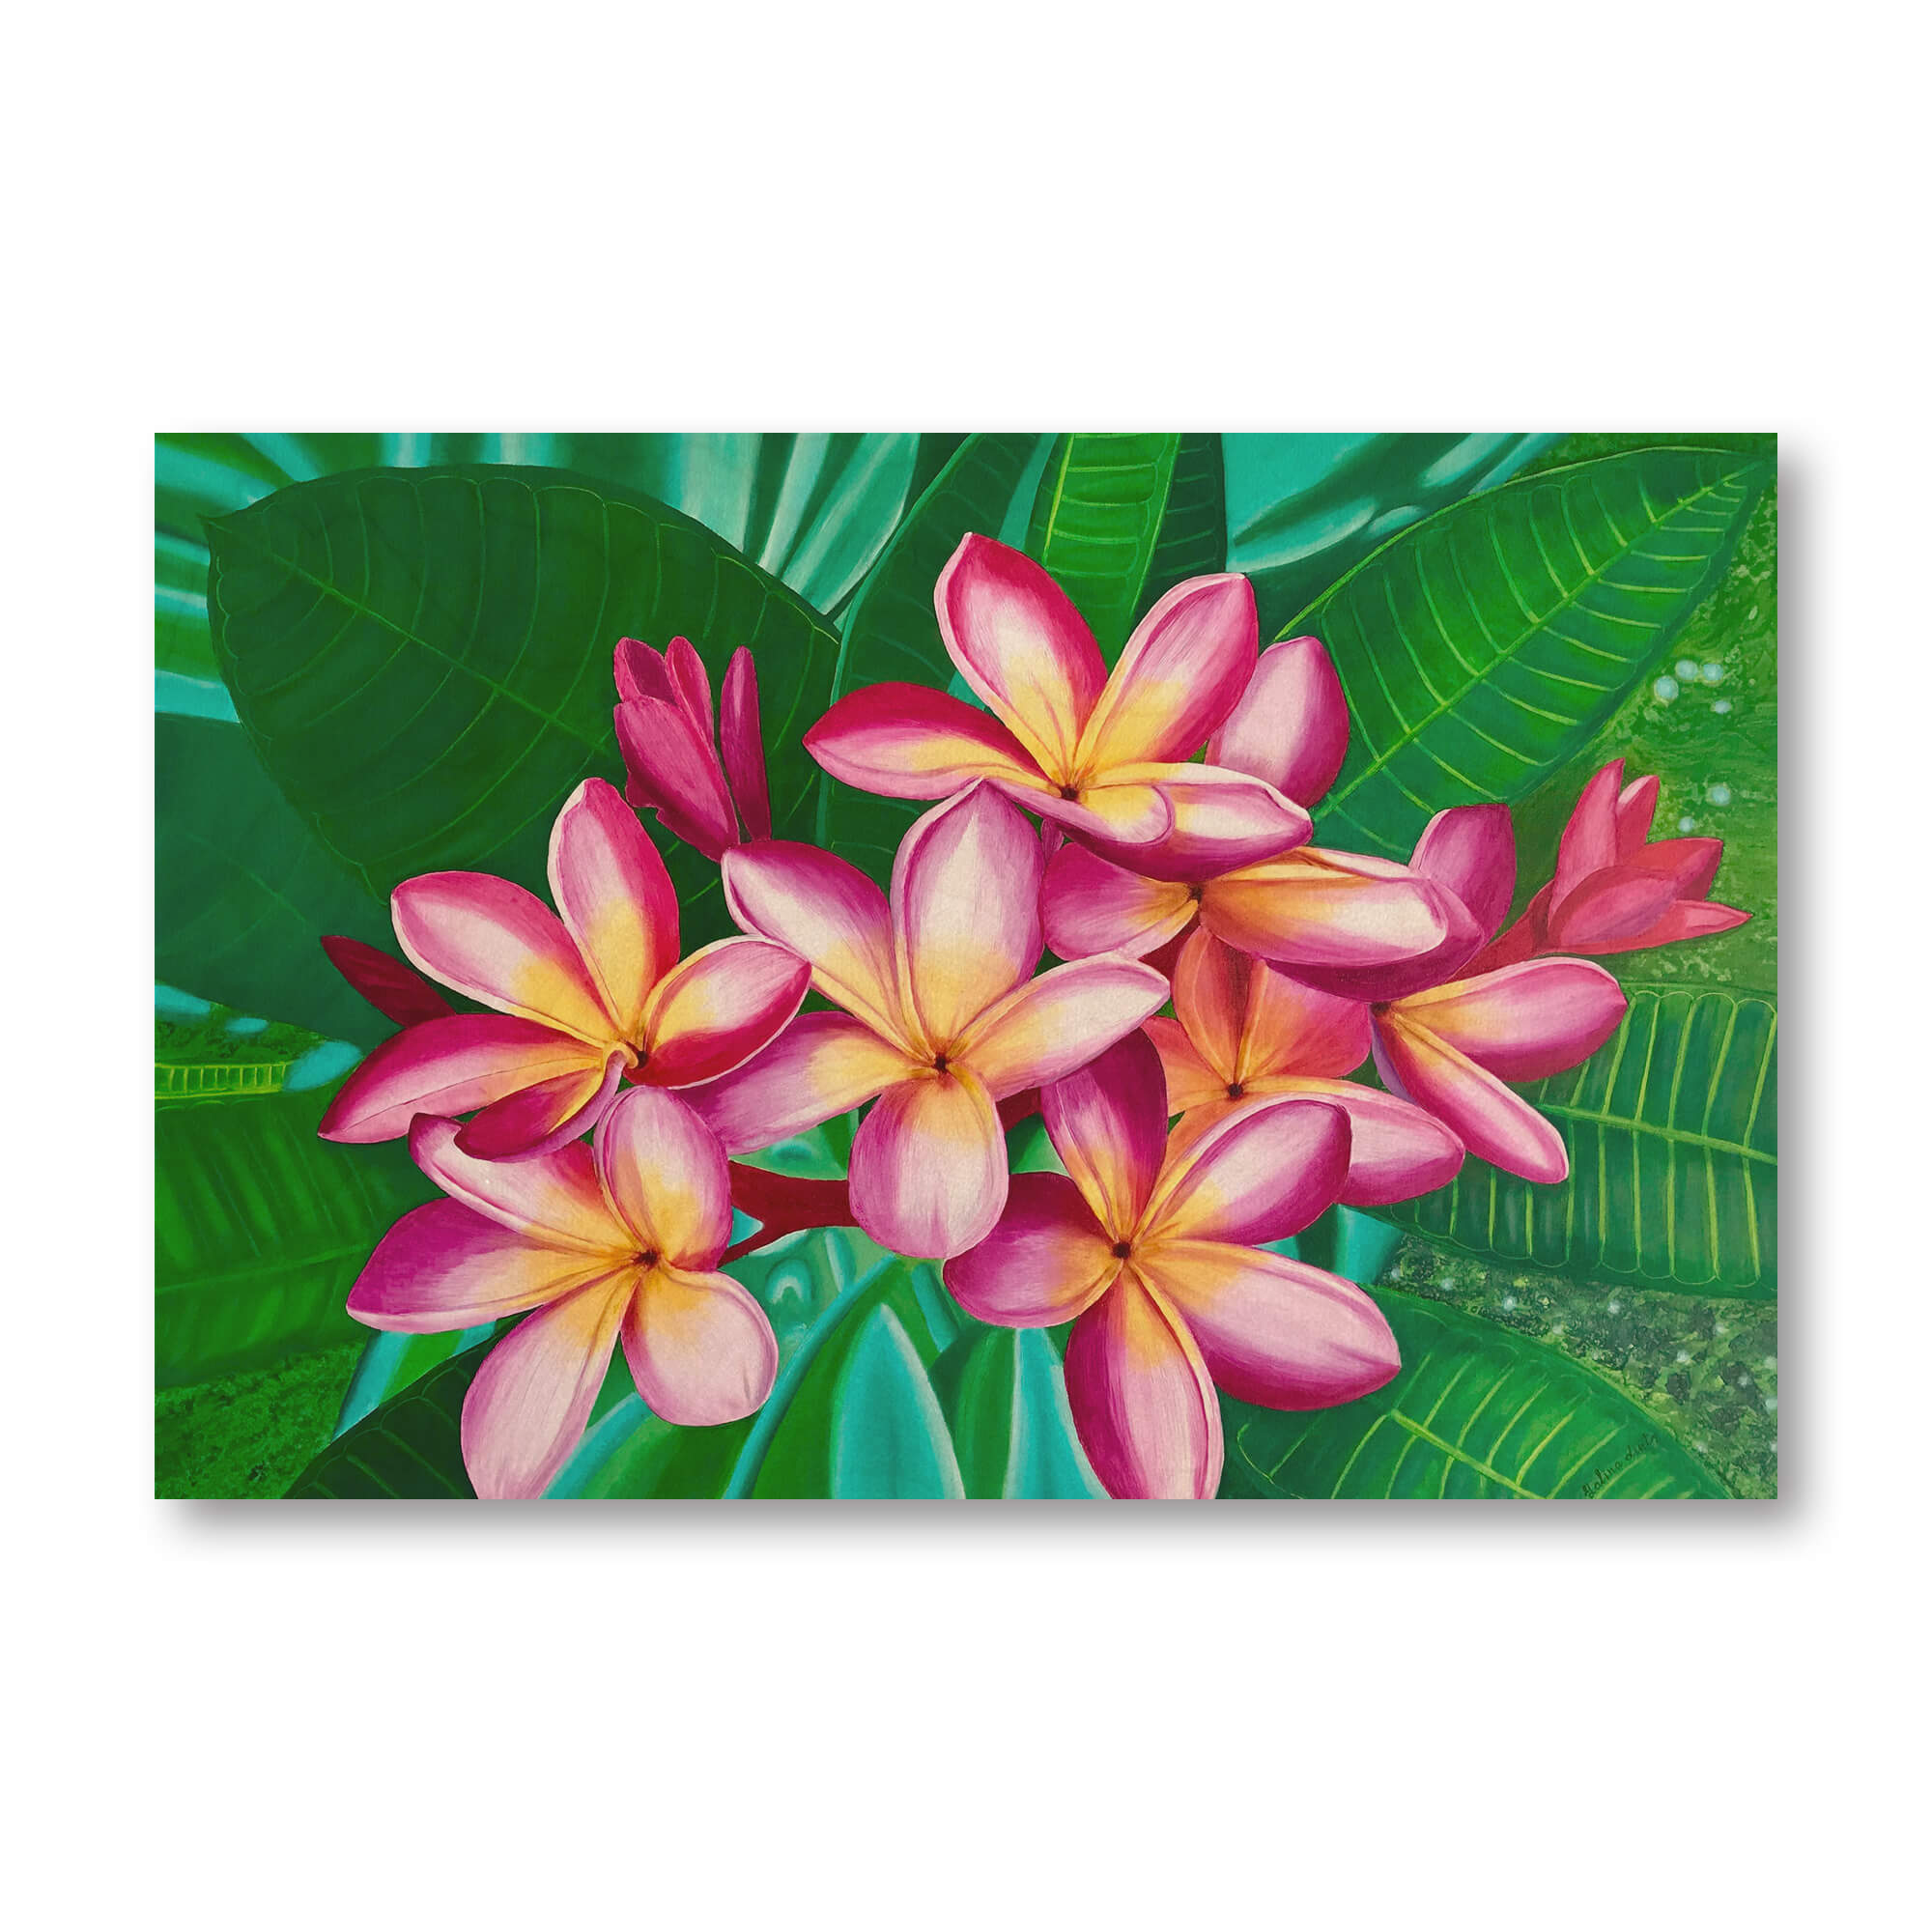 Wood art print showcasing a blooming plumeria flower by hawaii artist Galina Lintz 